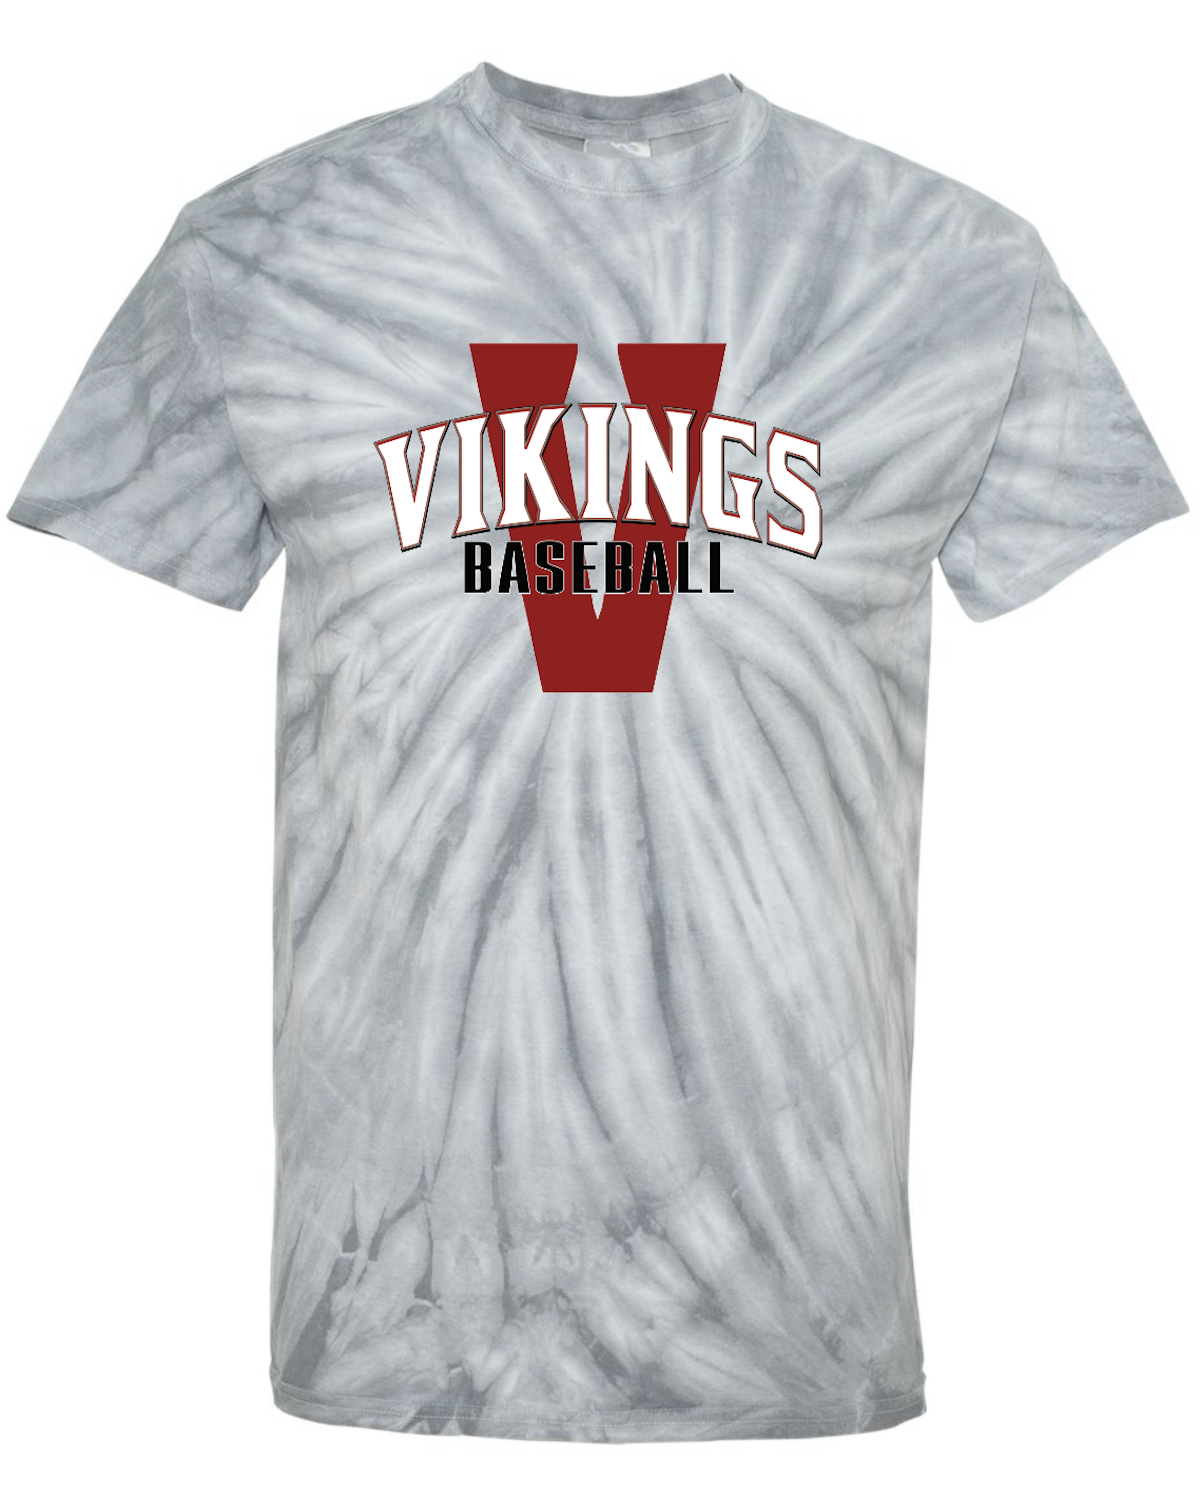 Vikings Baseball Cyclone Tie Dye T-shirt